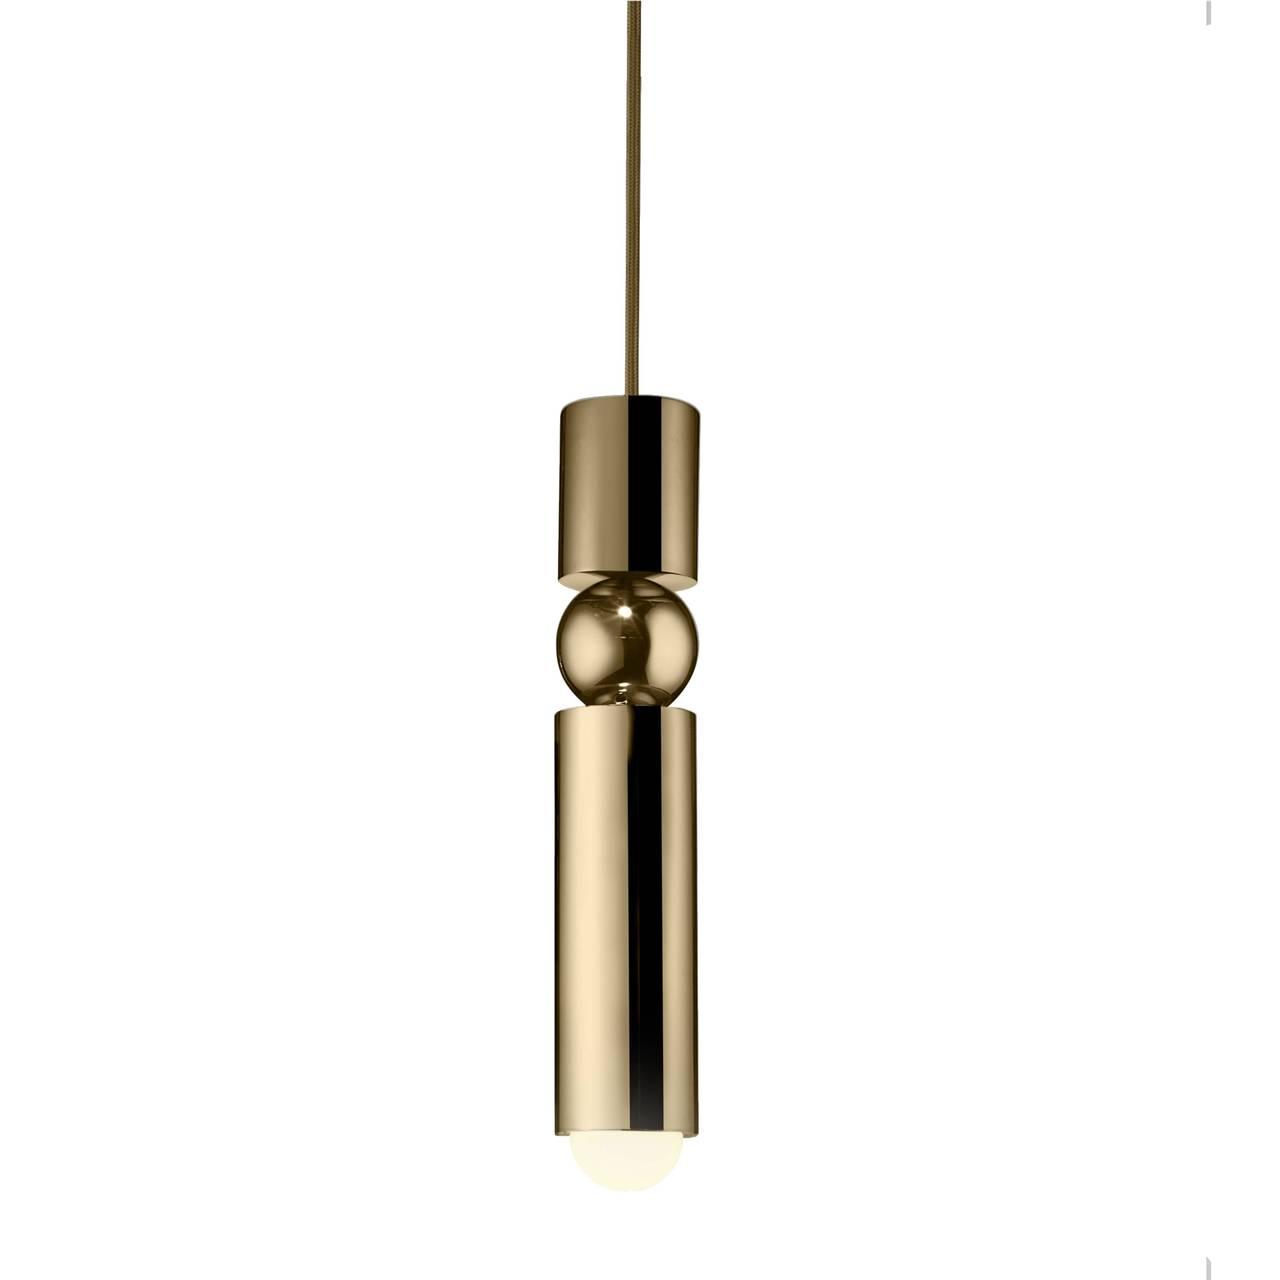 Lee Broom  Fulcrum light Hanglamp